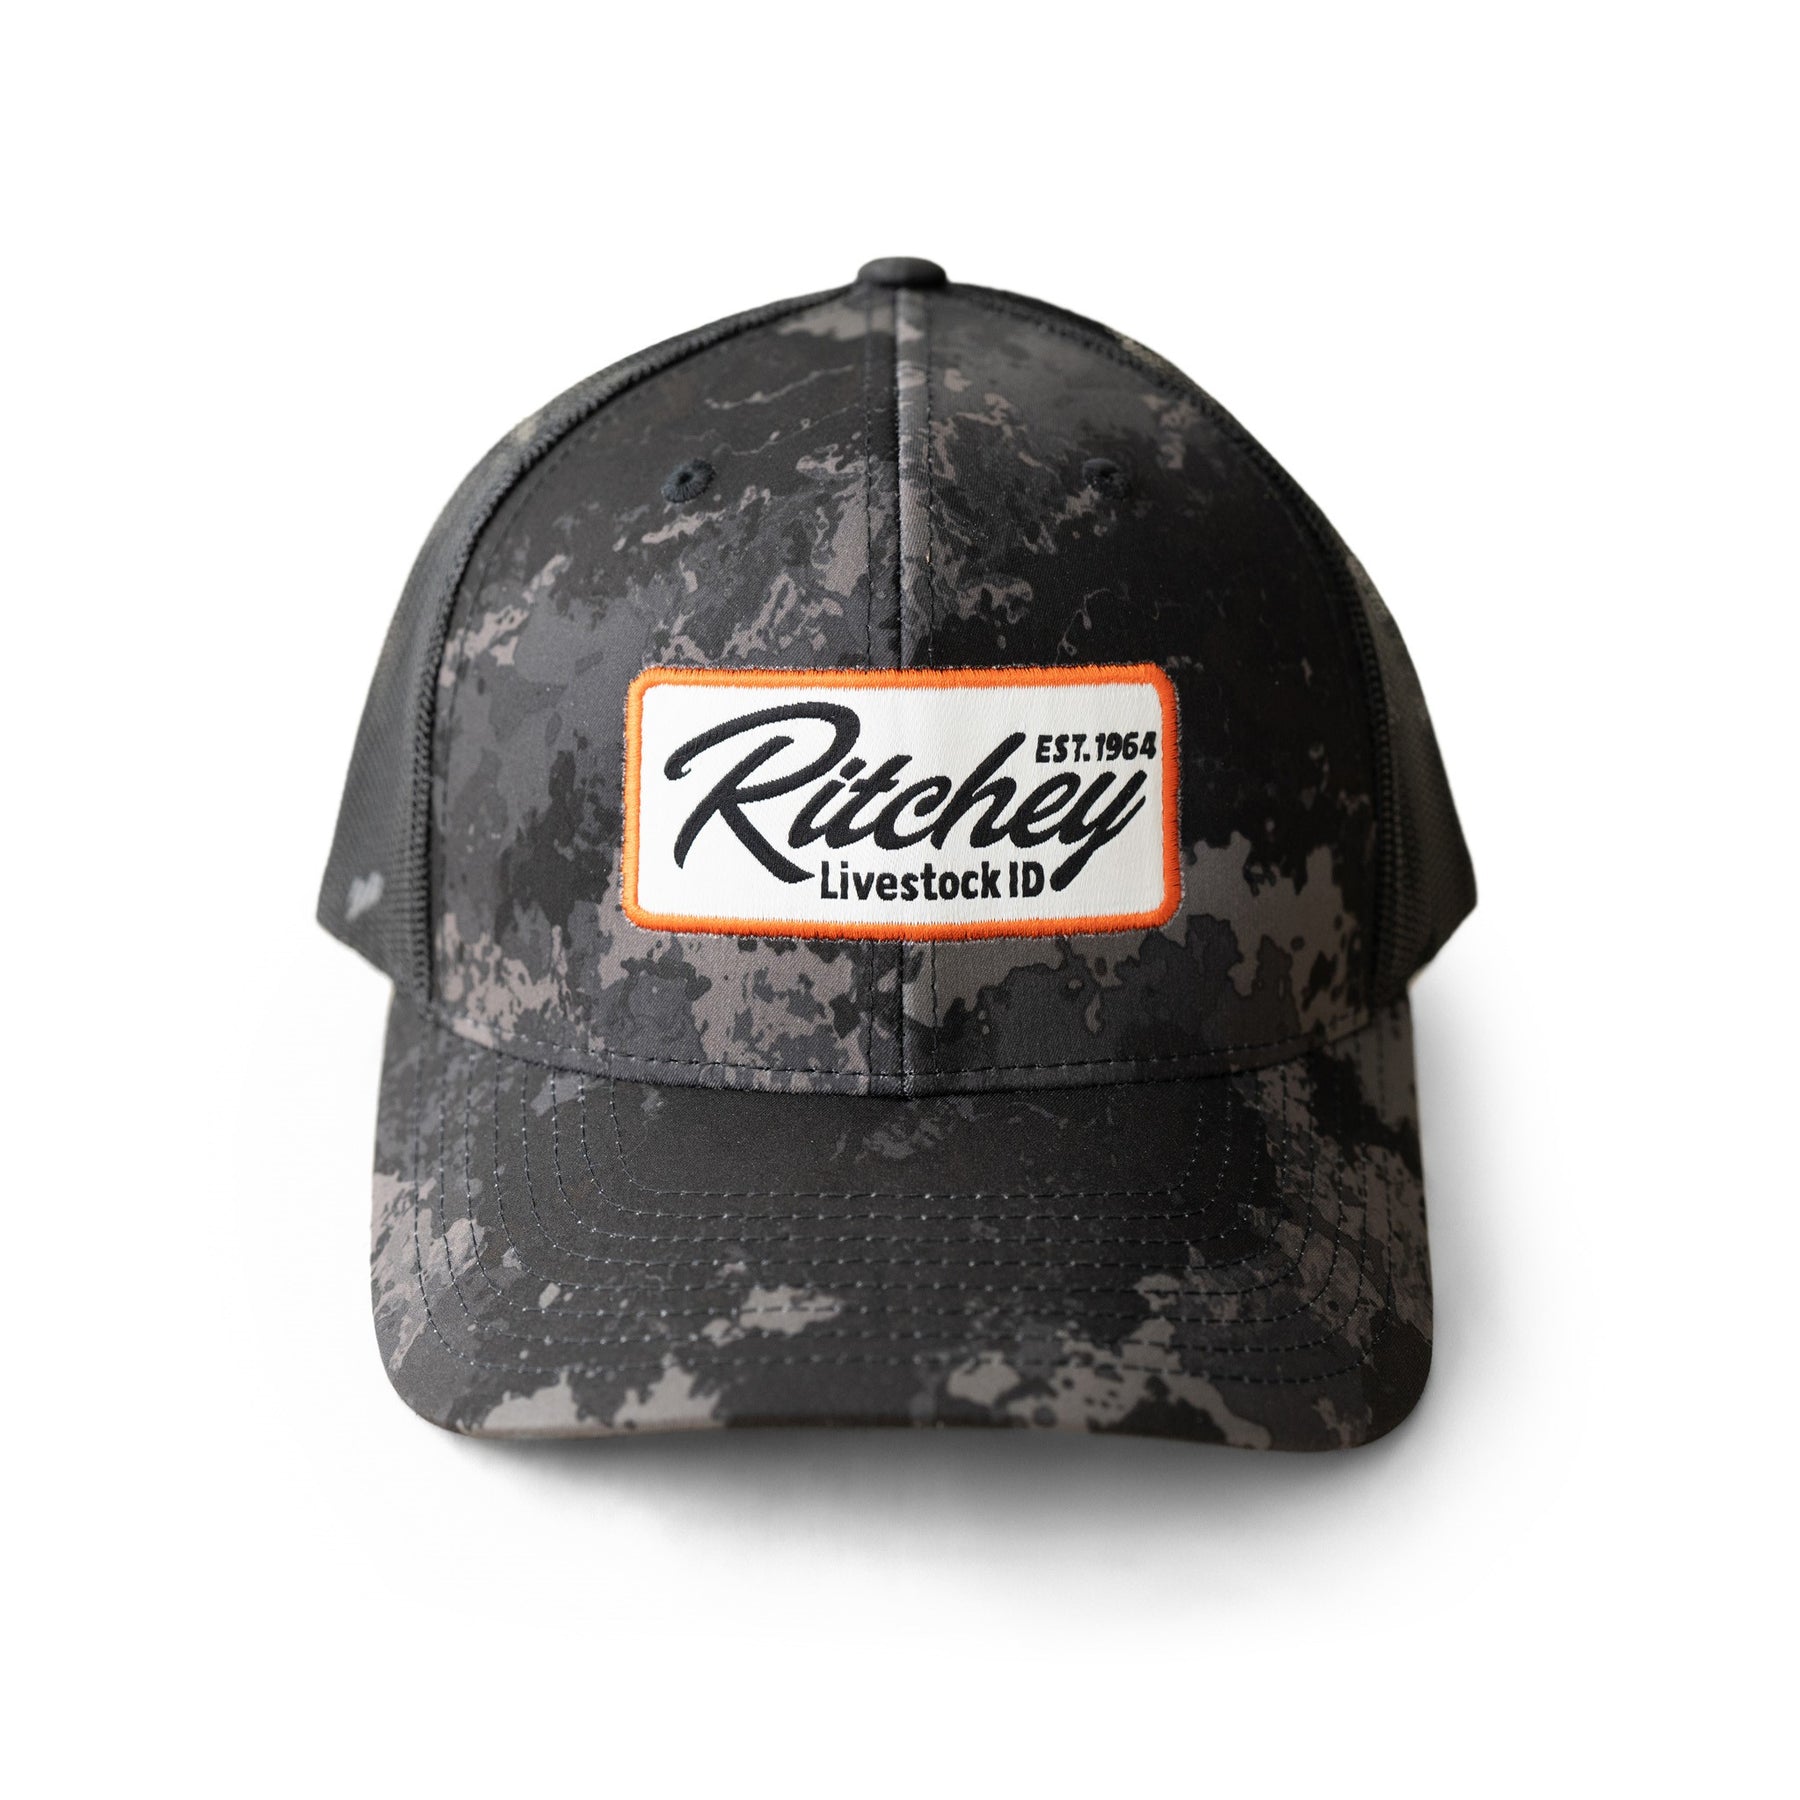 Camo Ritchey Livestock ID trucker hat